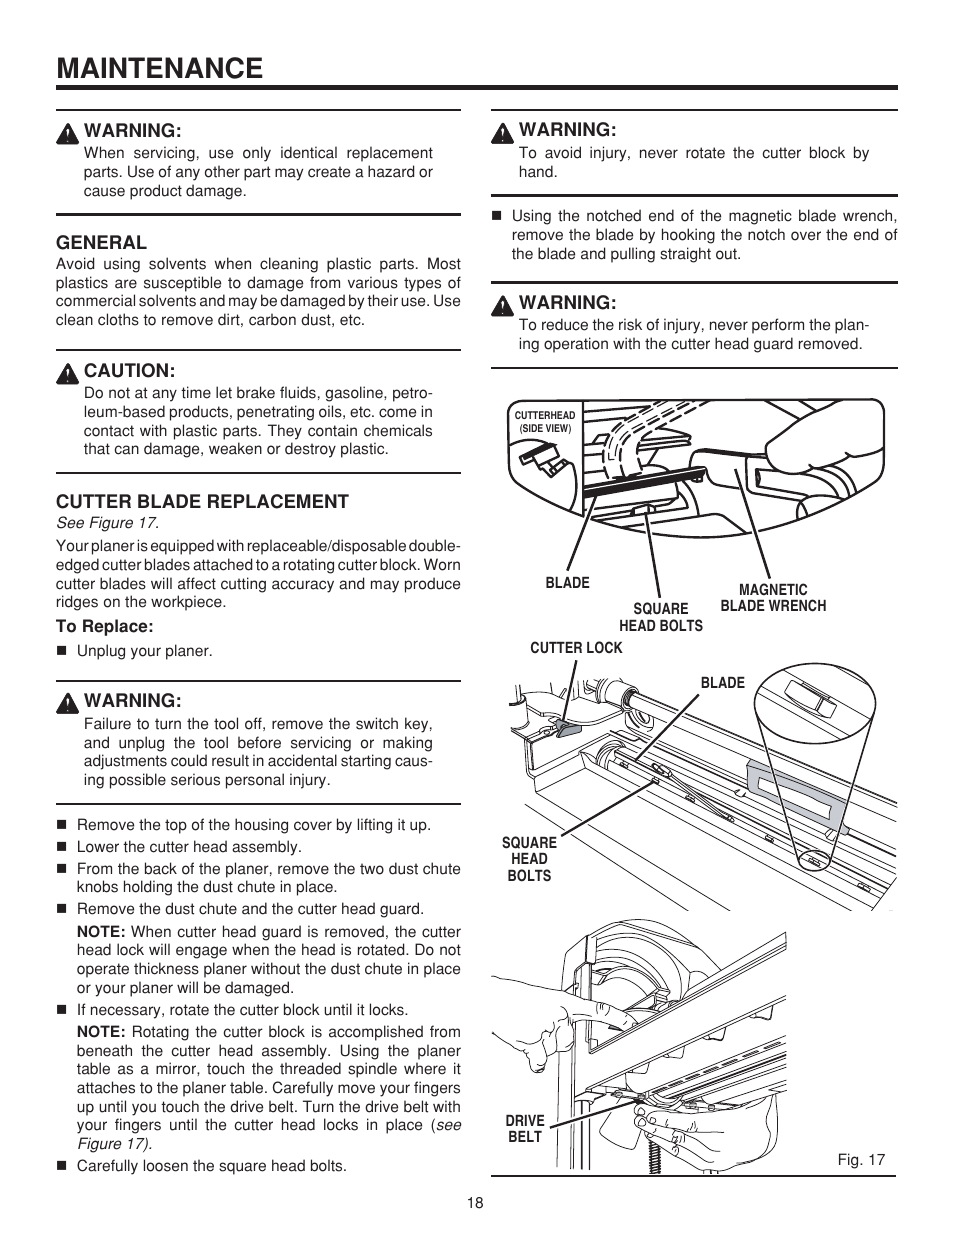 Maintenance | RIDGID TP1300LS User Manual | Page 18 / 24